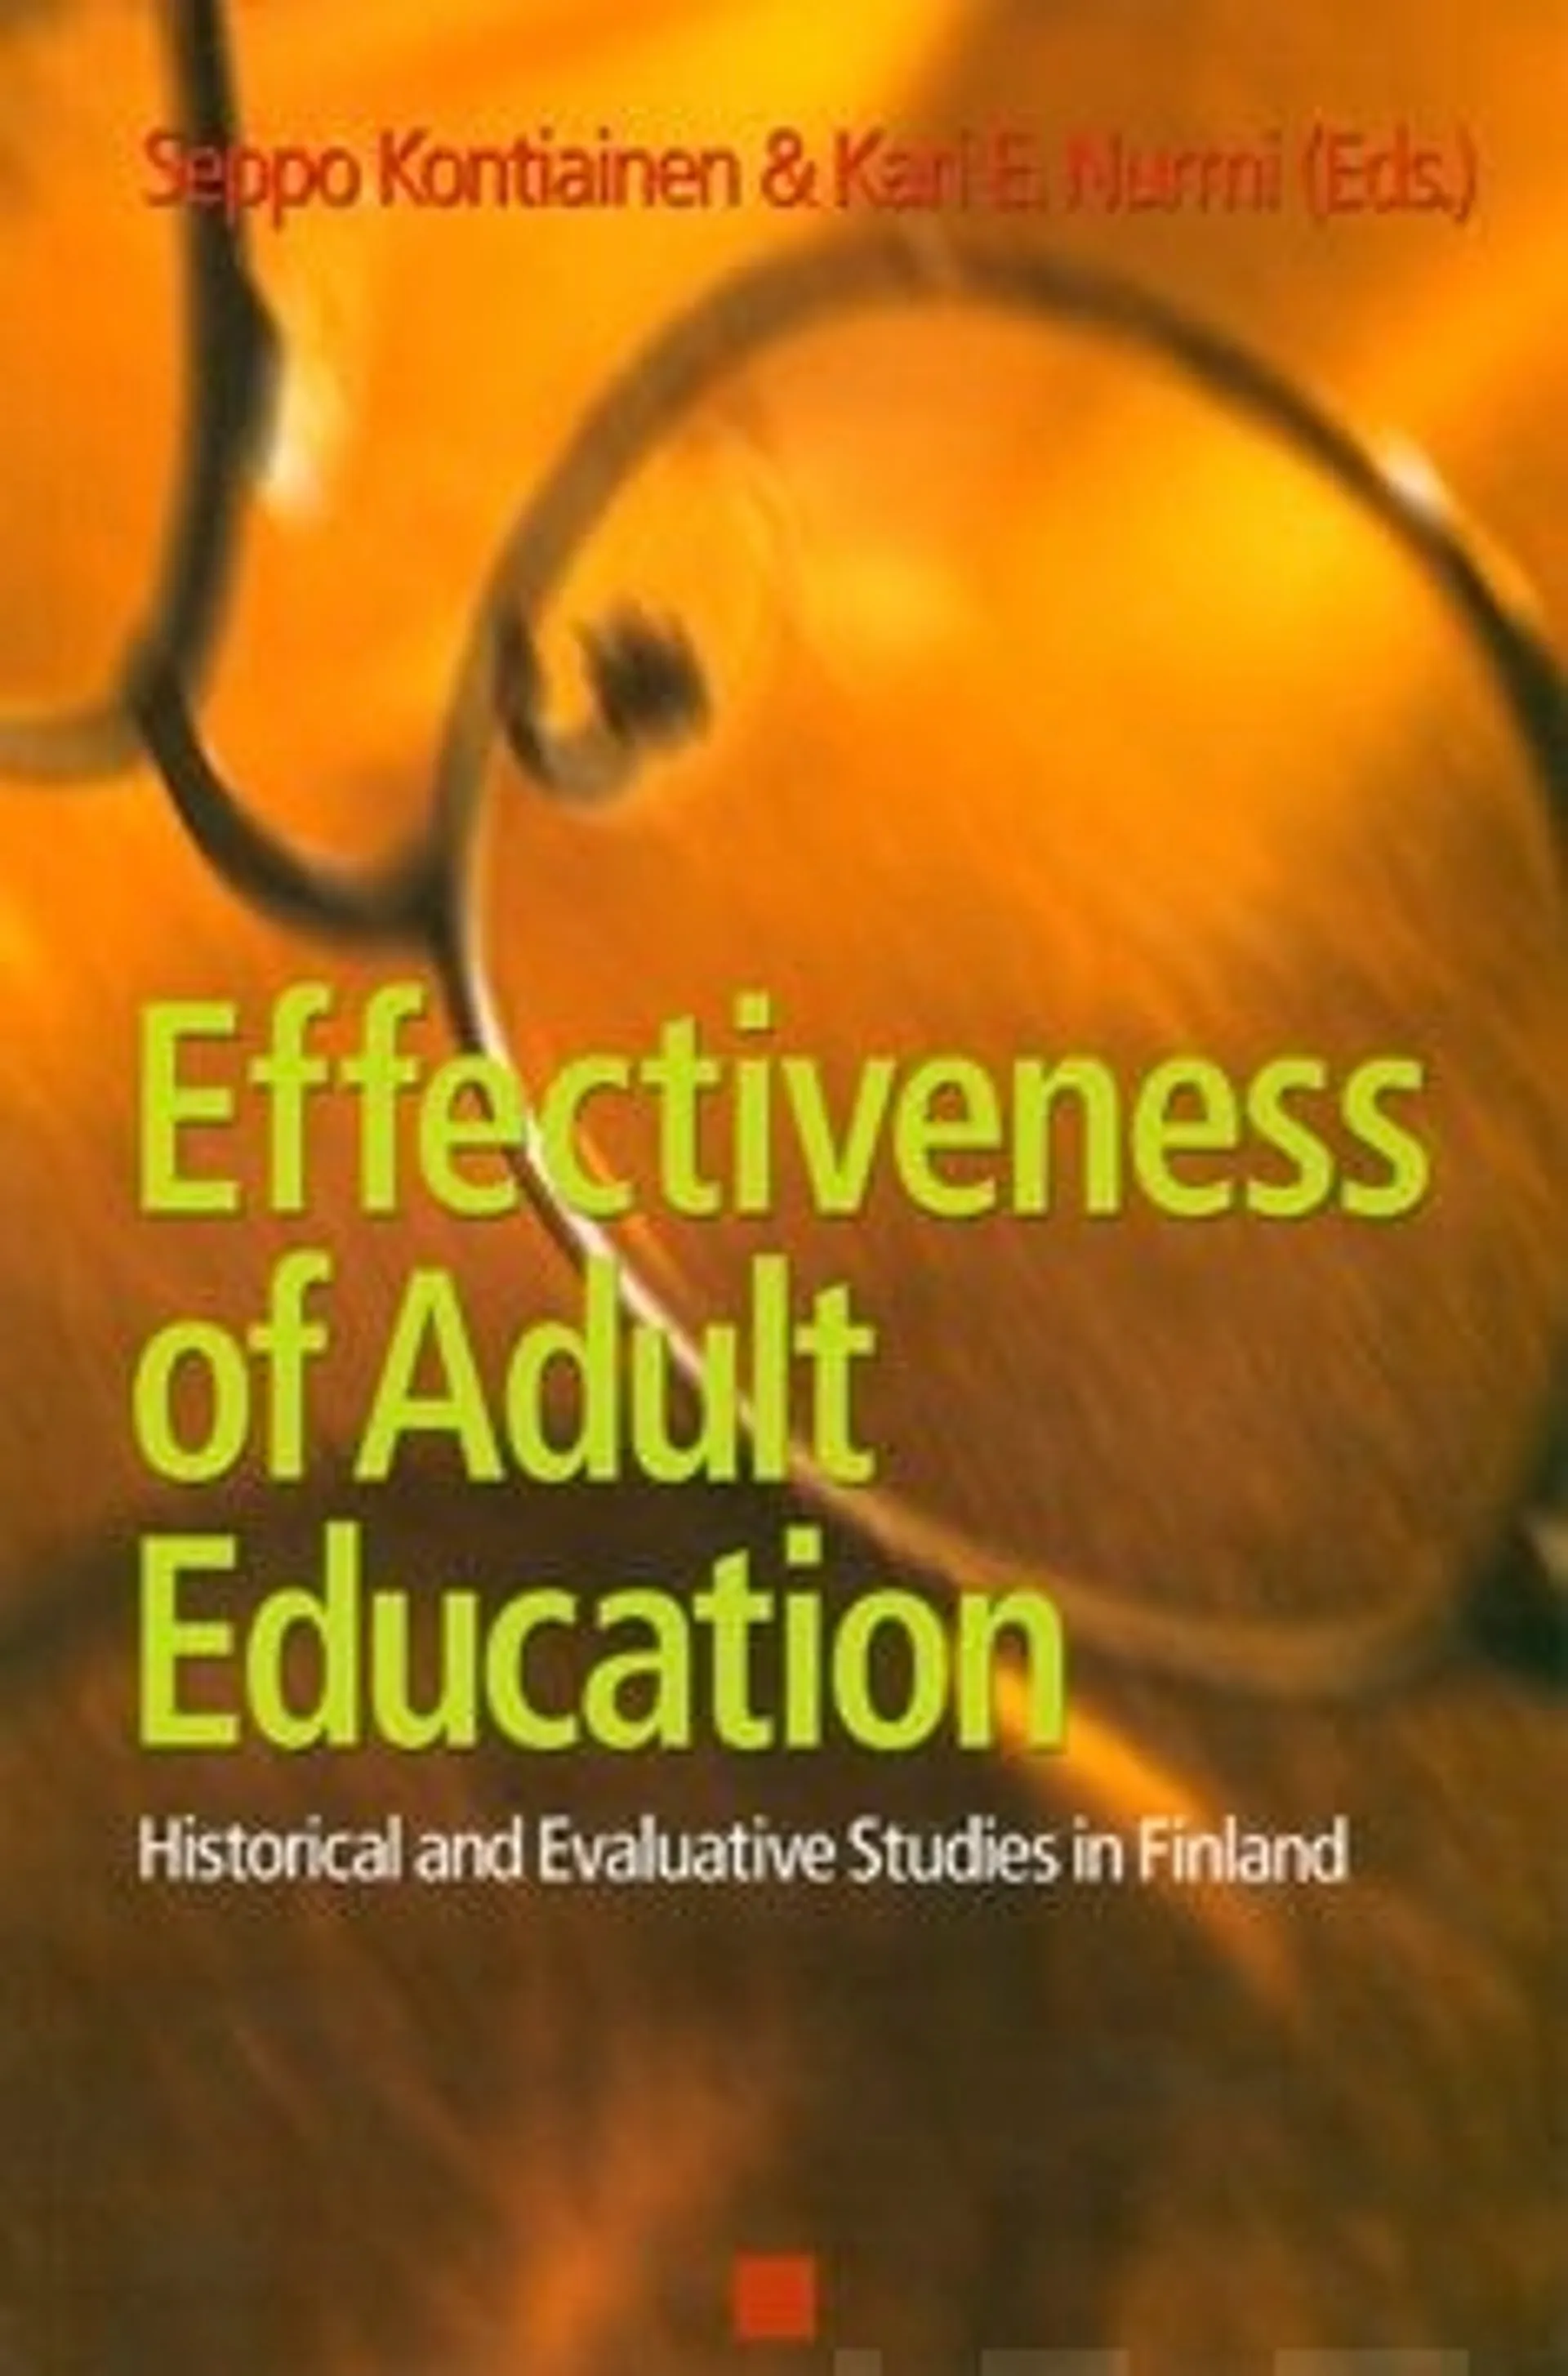 Kontiainen, Effectiveness of adult education